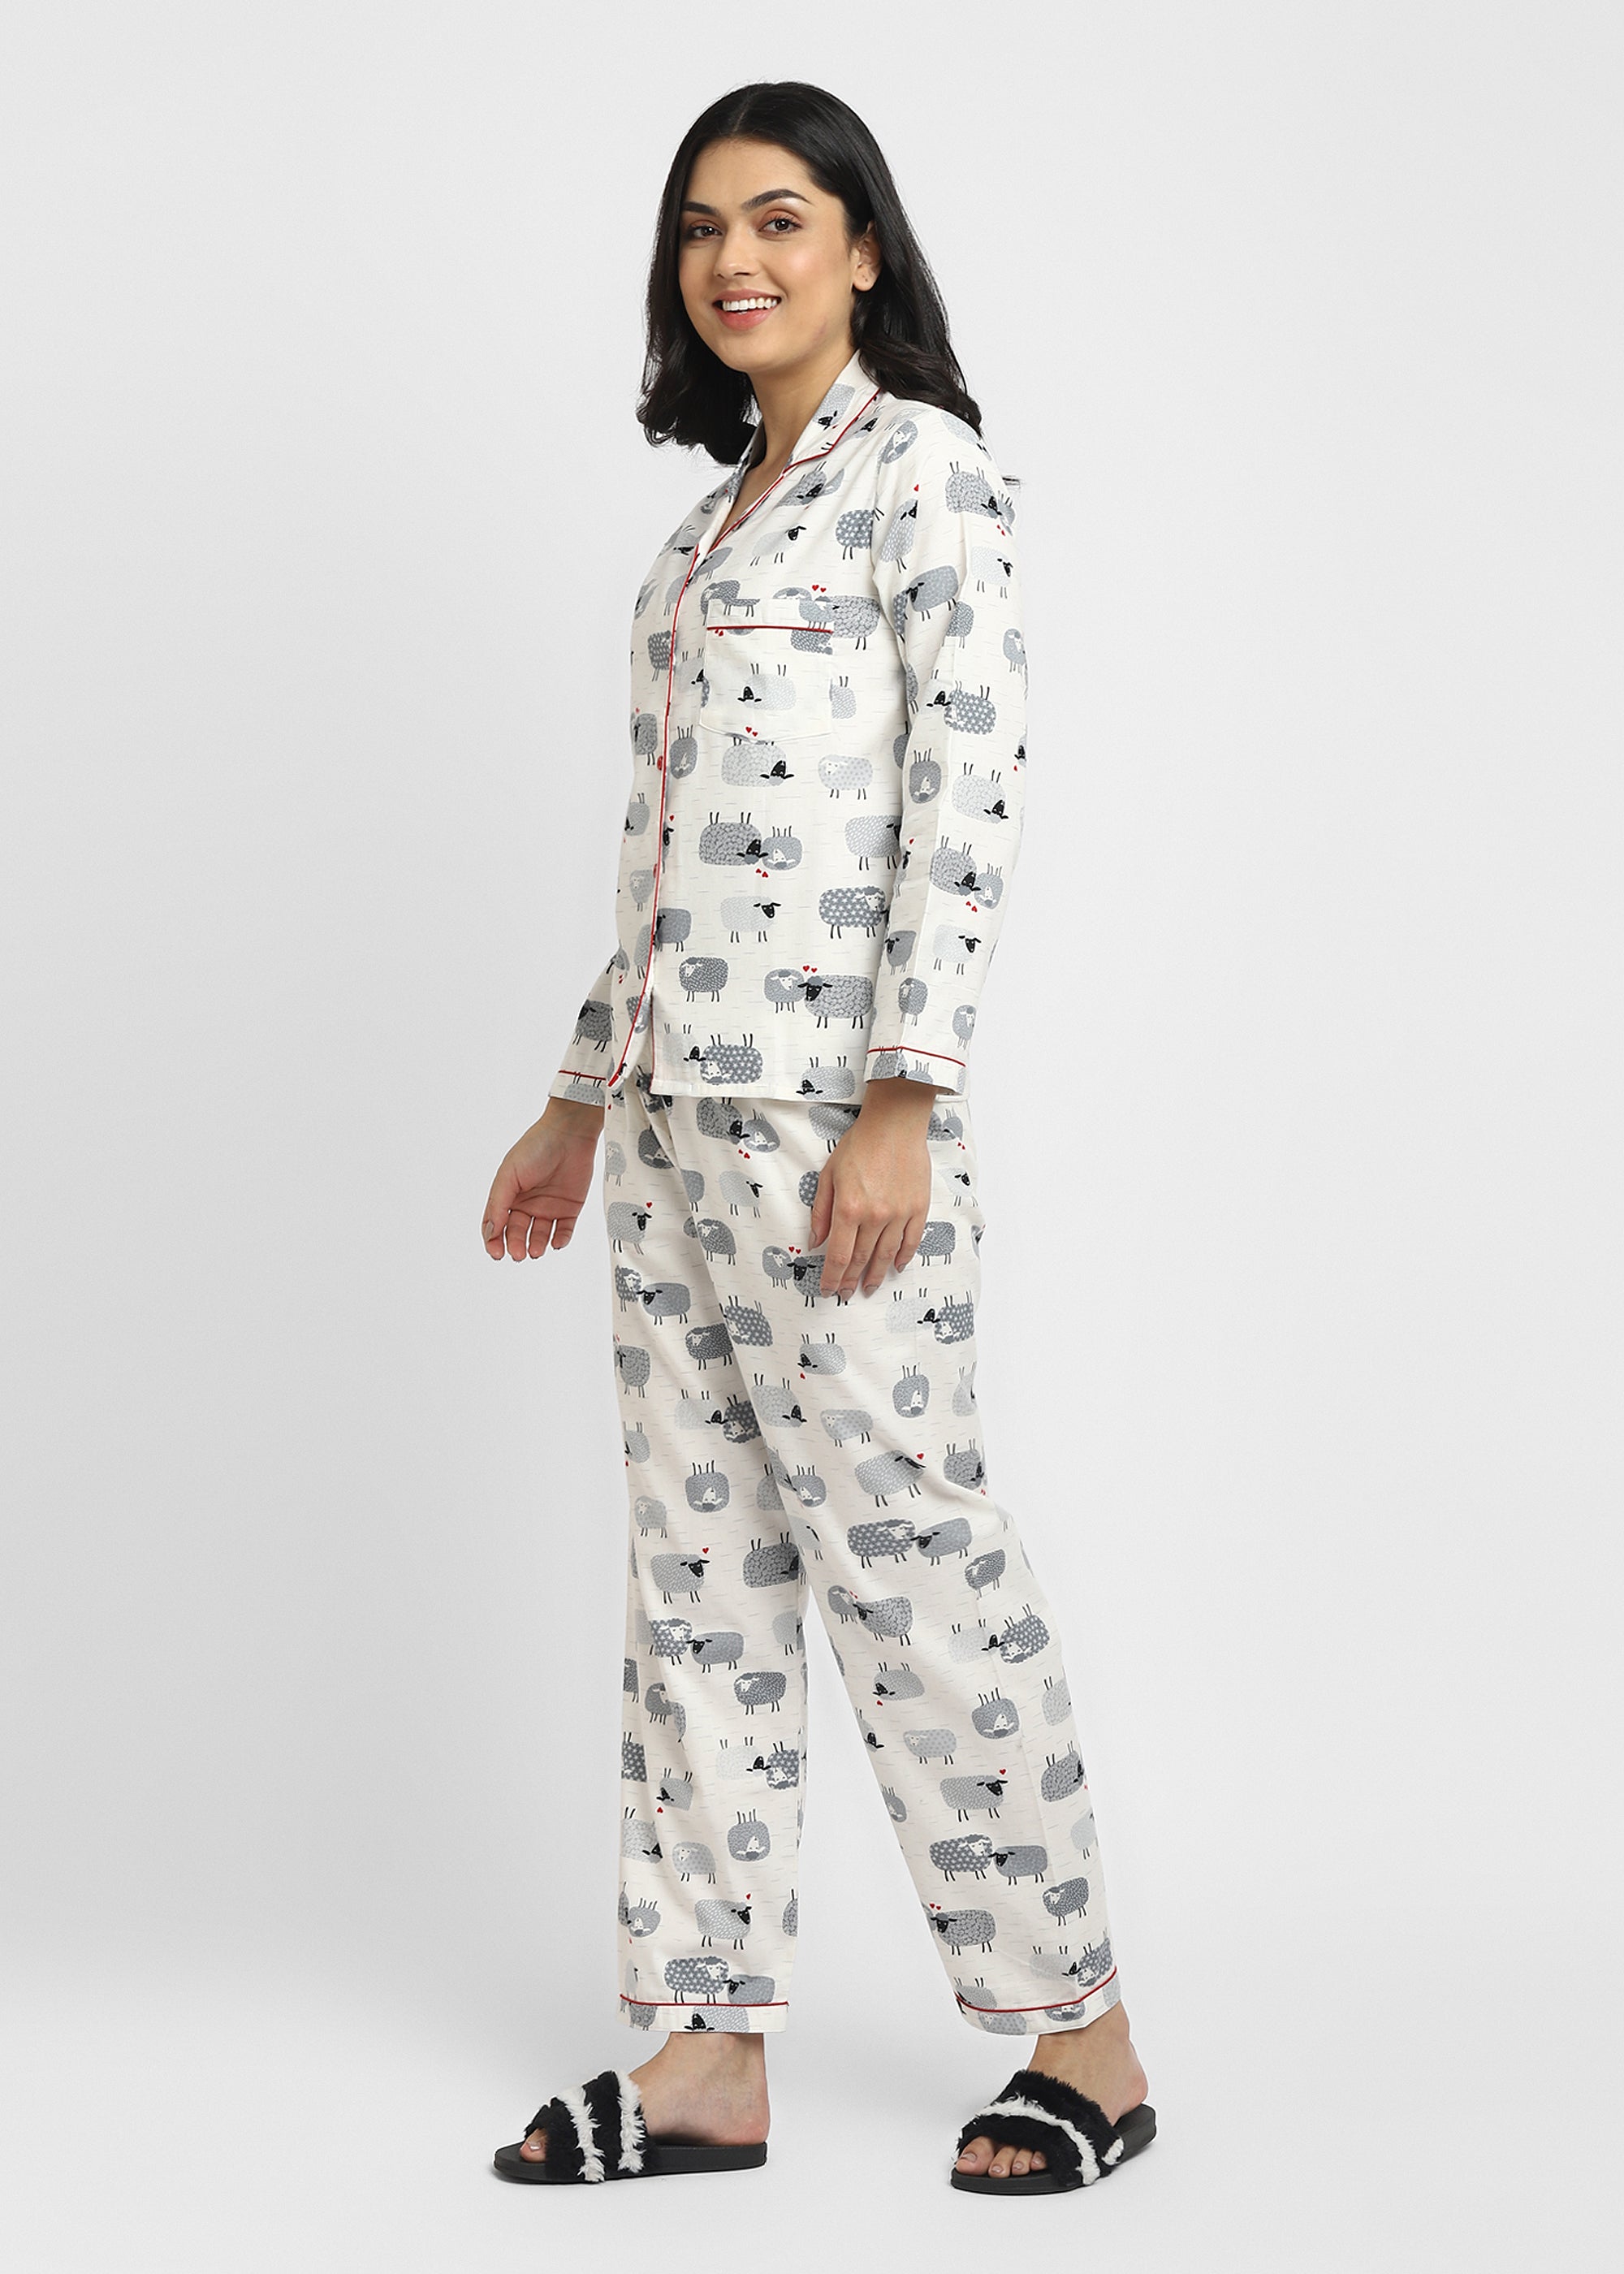 Sheep Print Cotton Flannel Long Sleeve Women's Night Suit - Shopbloom